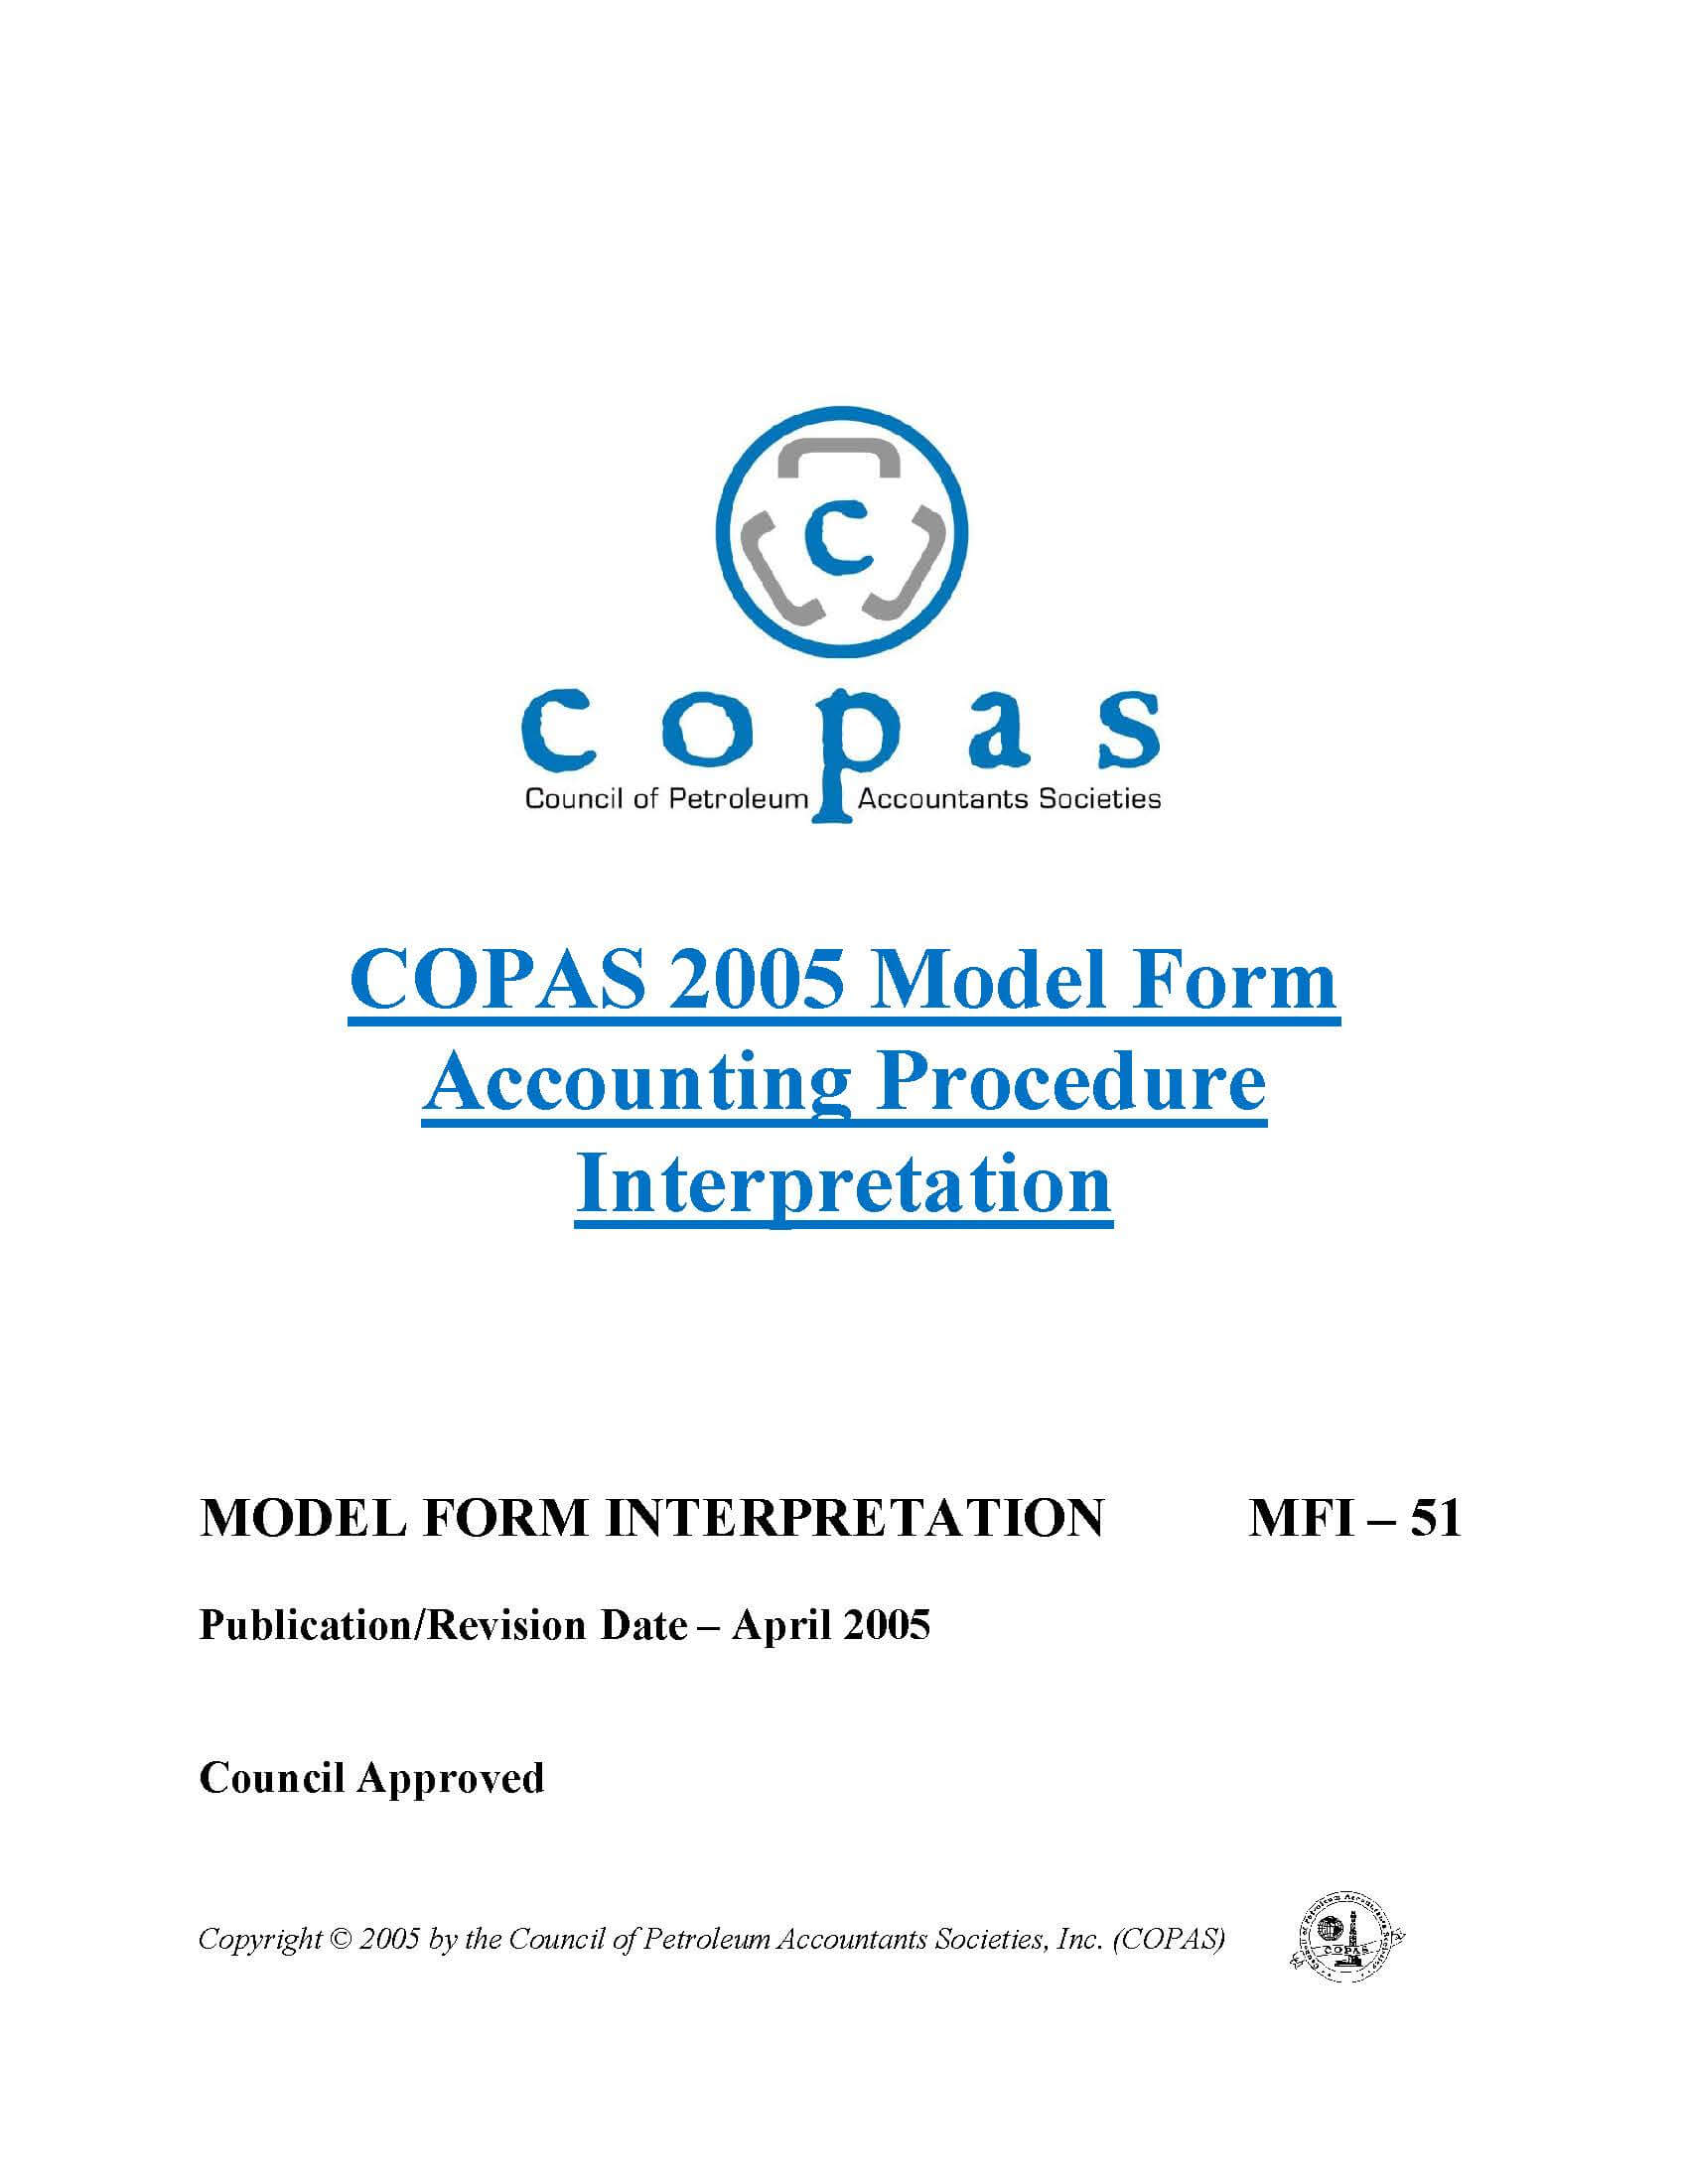 MFI-51 2005 Model Form Accounting Procedure Interpretation - products MFI 51 2005 Model Form Accounting Procedure Interpretation - Council of Petroleum Accountants Societies